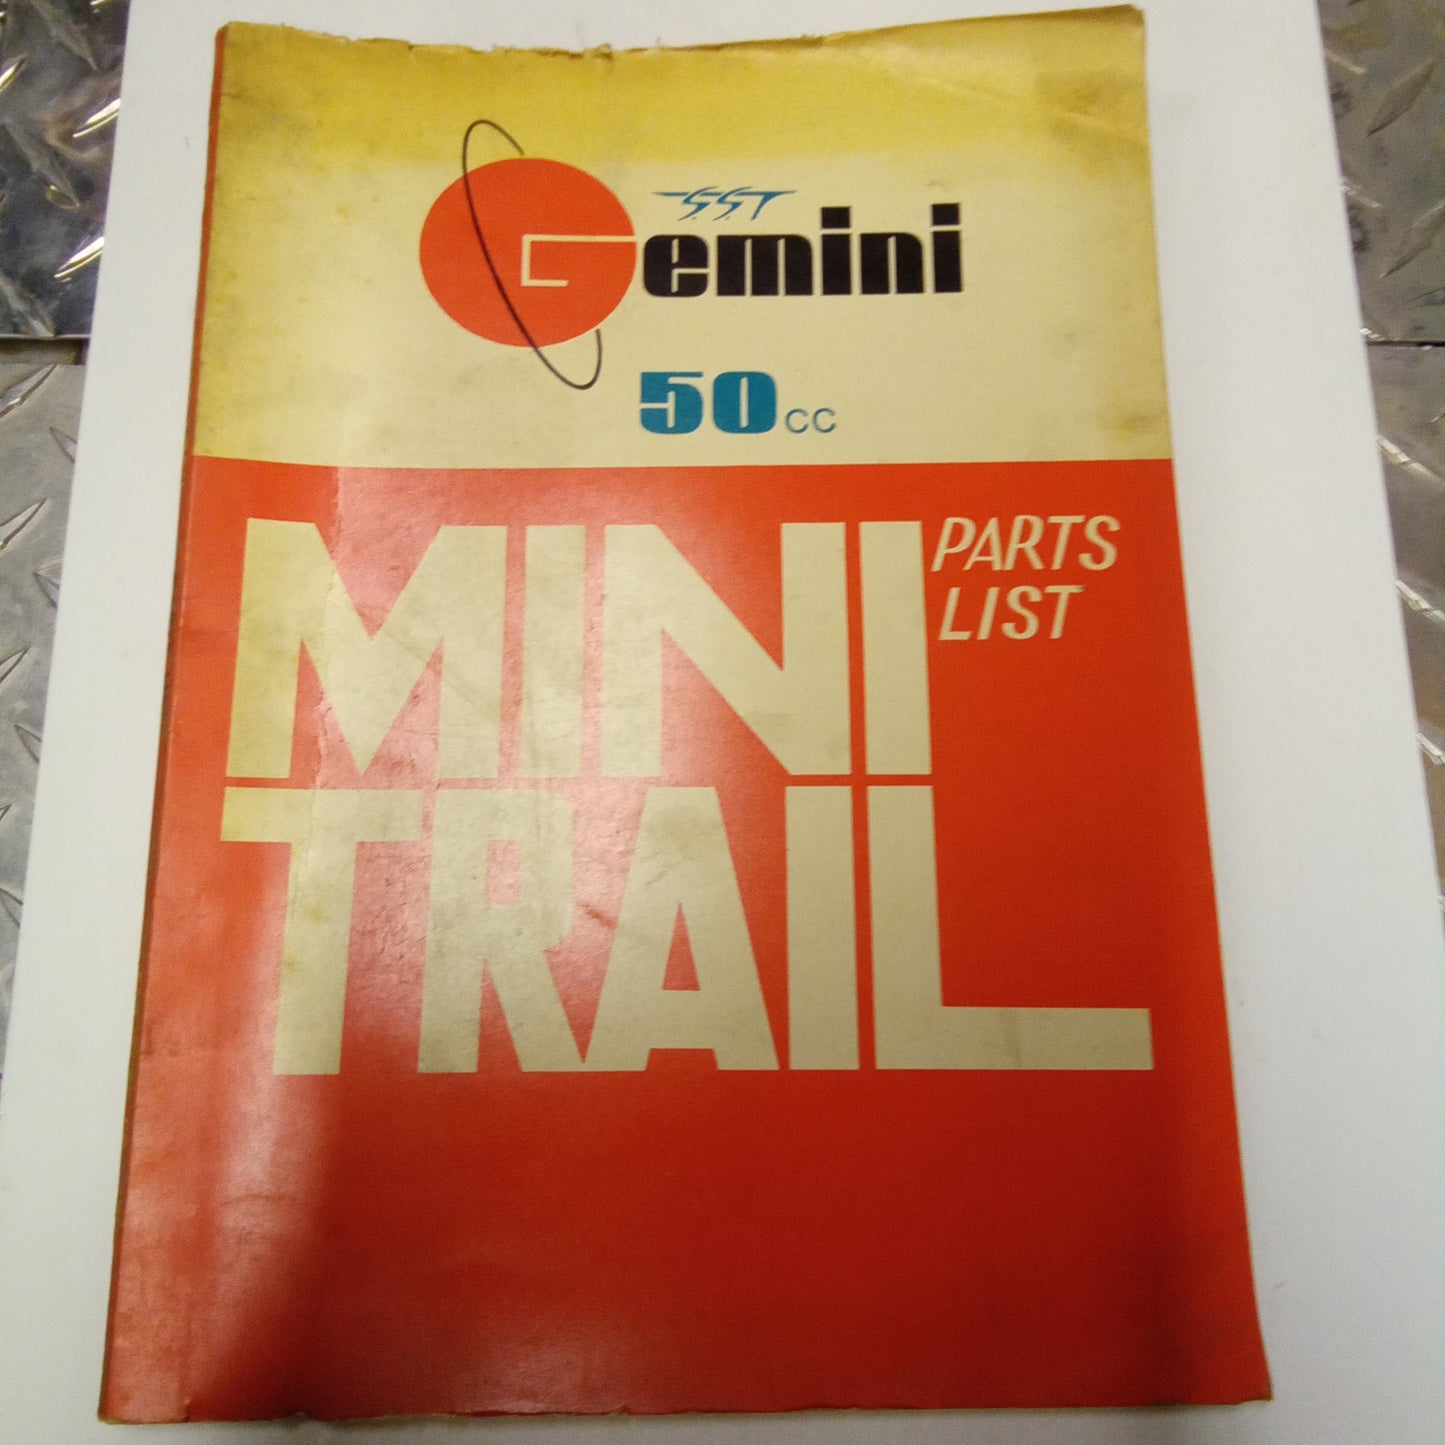 Gemini 50cc Mini Trail Parts Manual